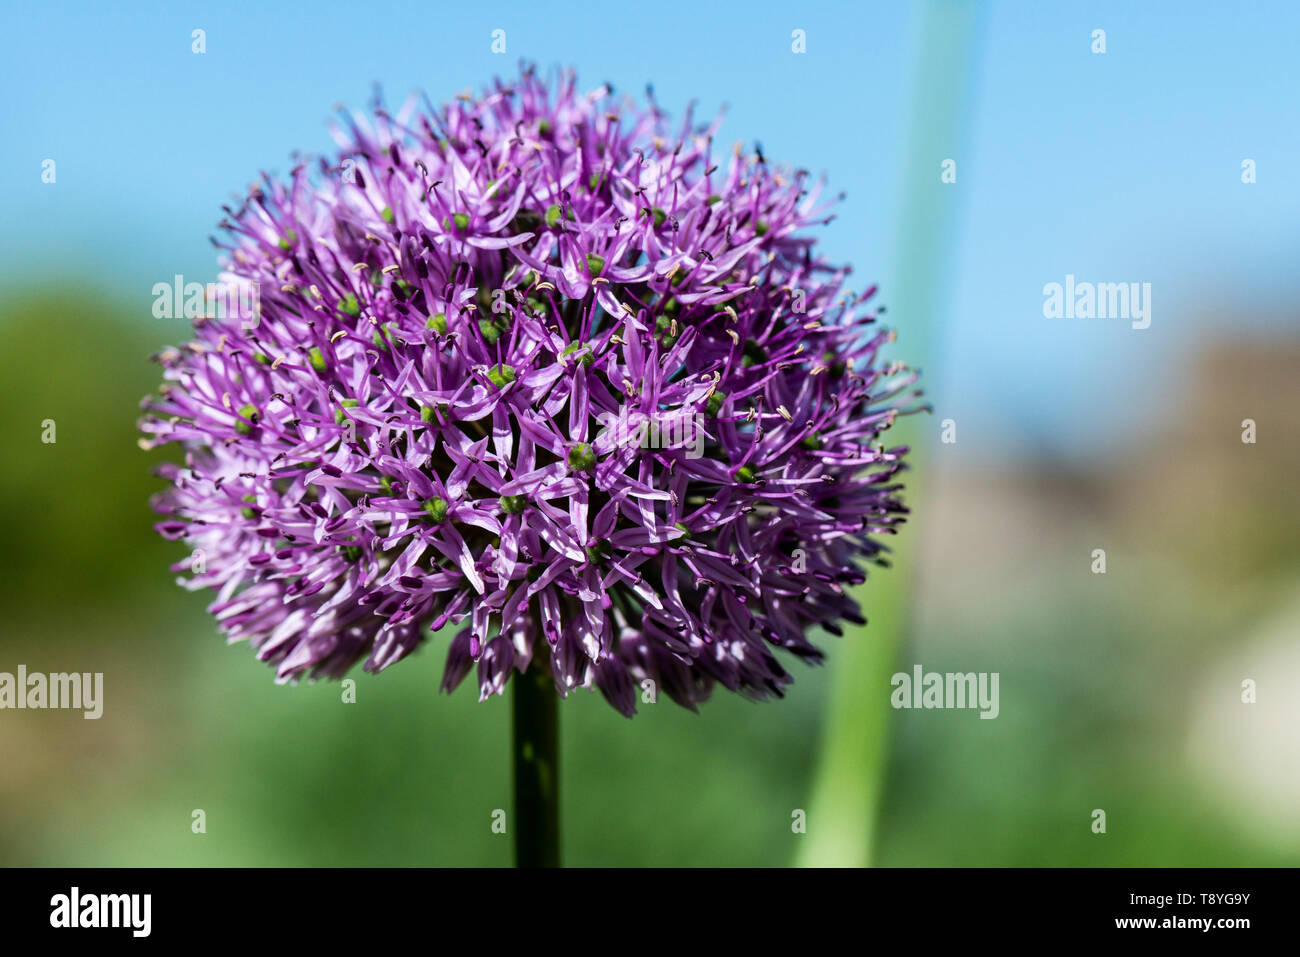 The purple flower head of an allium Stock Photo